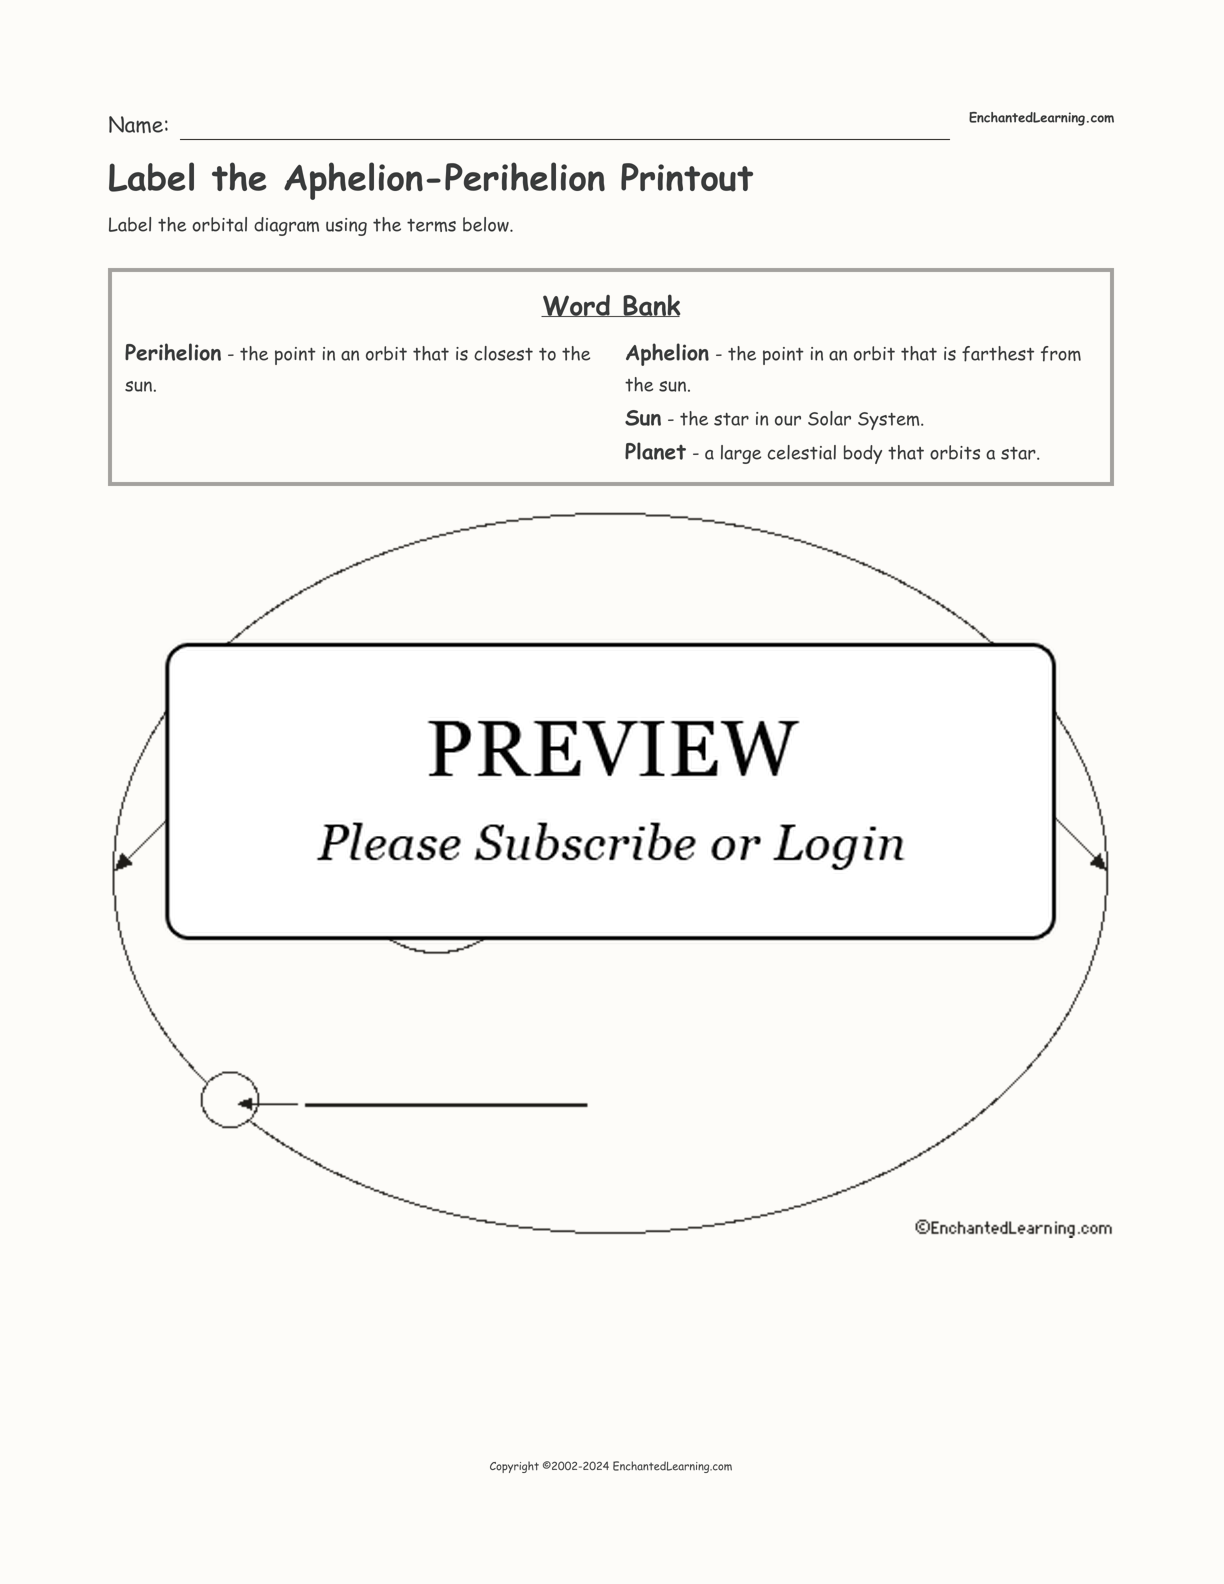 Label the Aphelion-Perihelion Printout interactive worksheet page 1